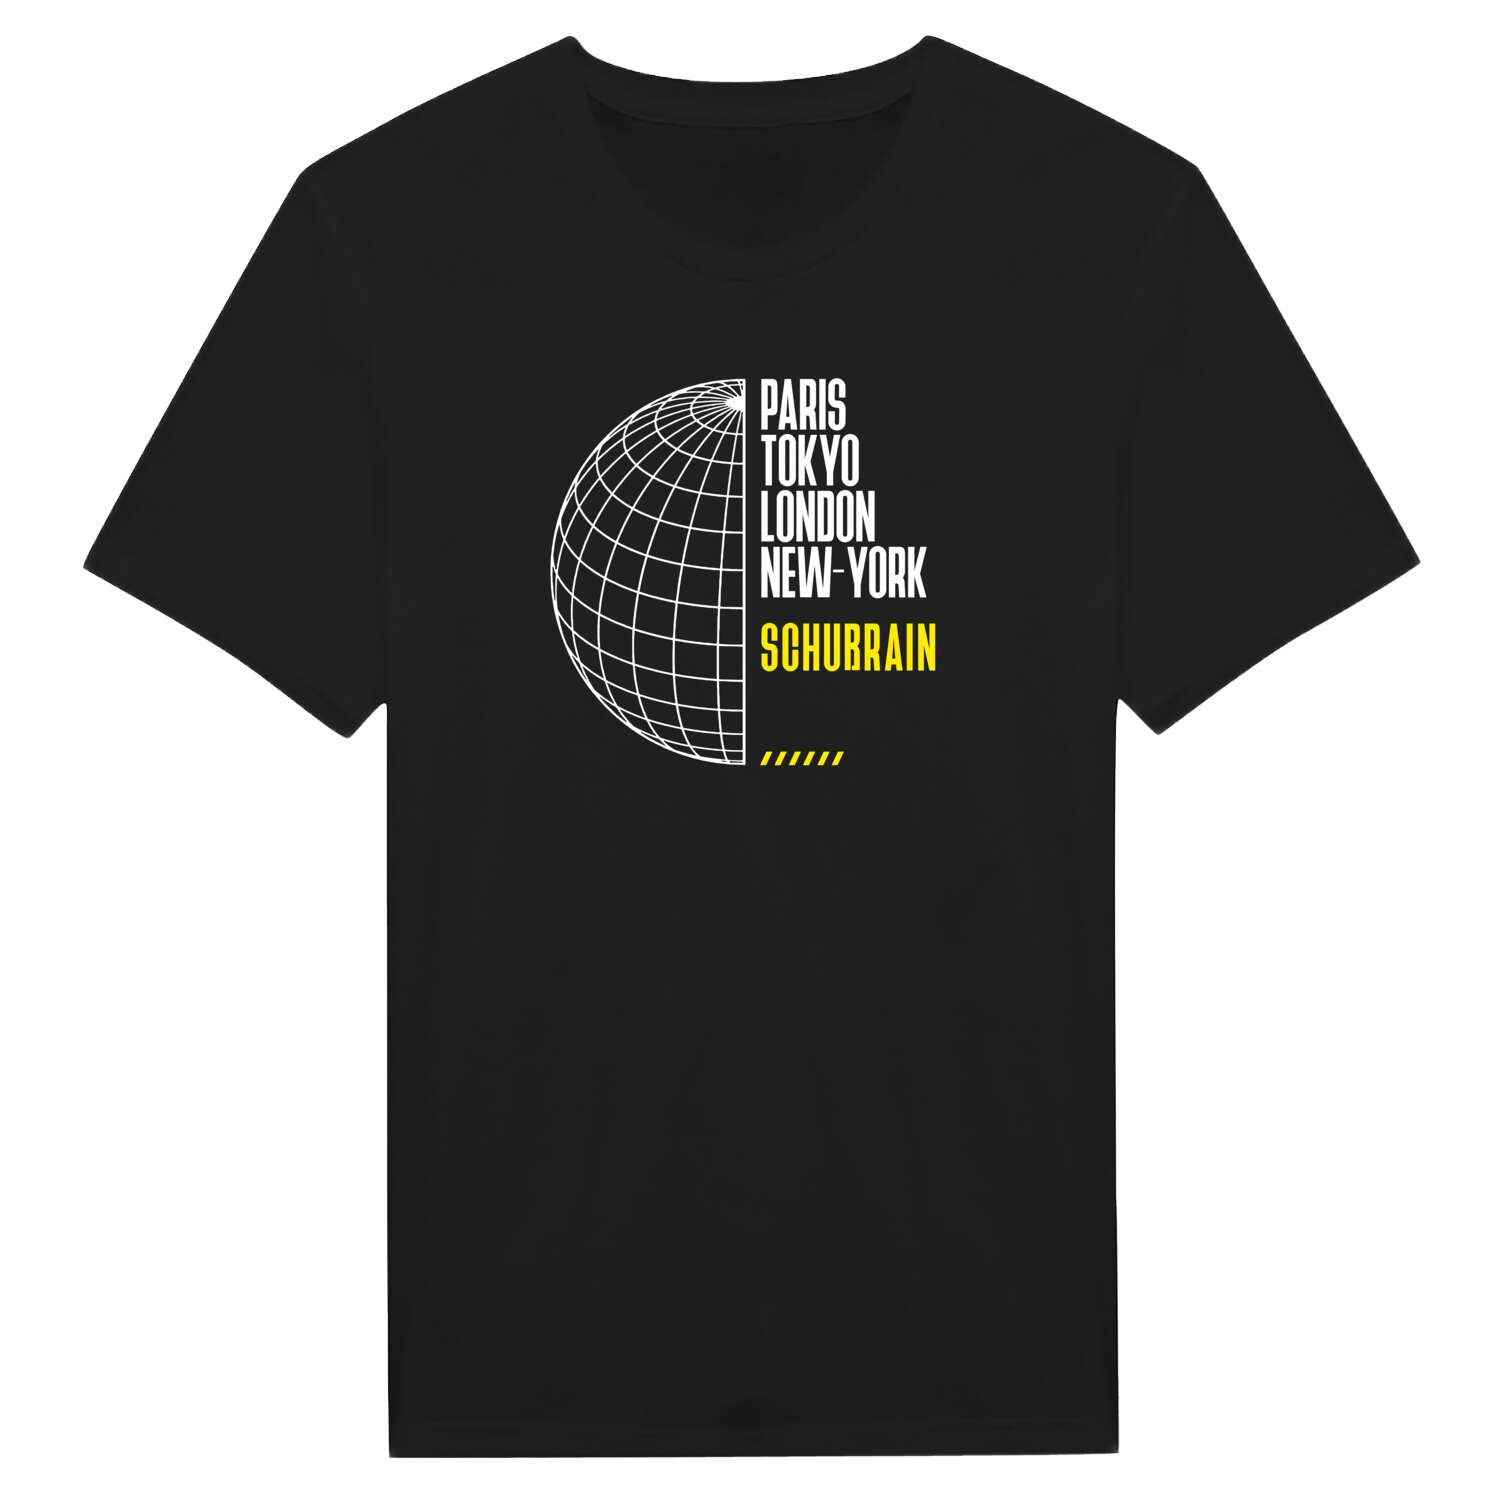 Schußrain T-Shirt »Paris Tokyo London«